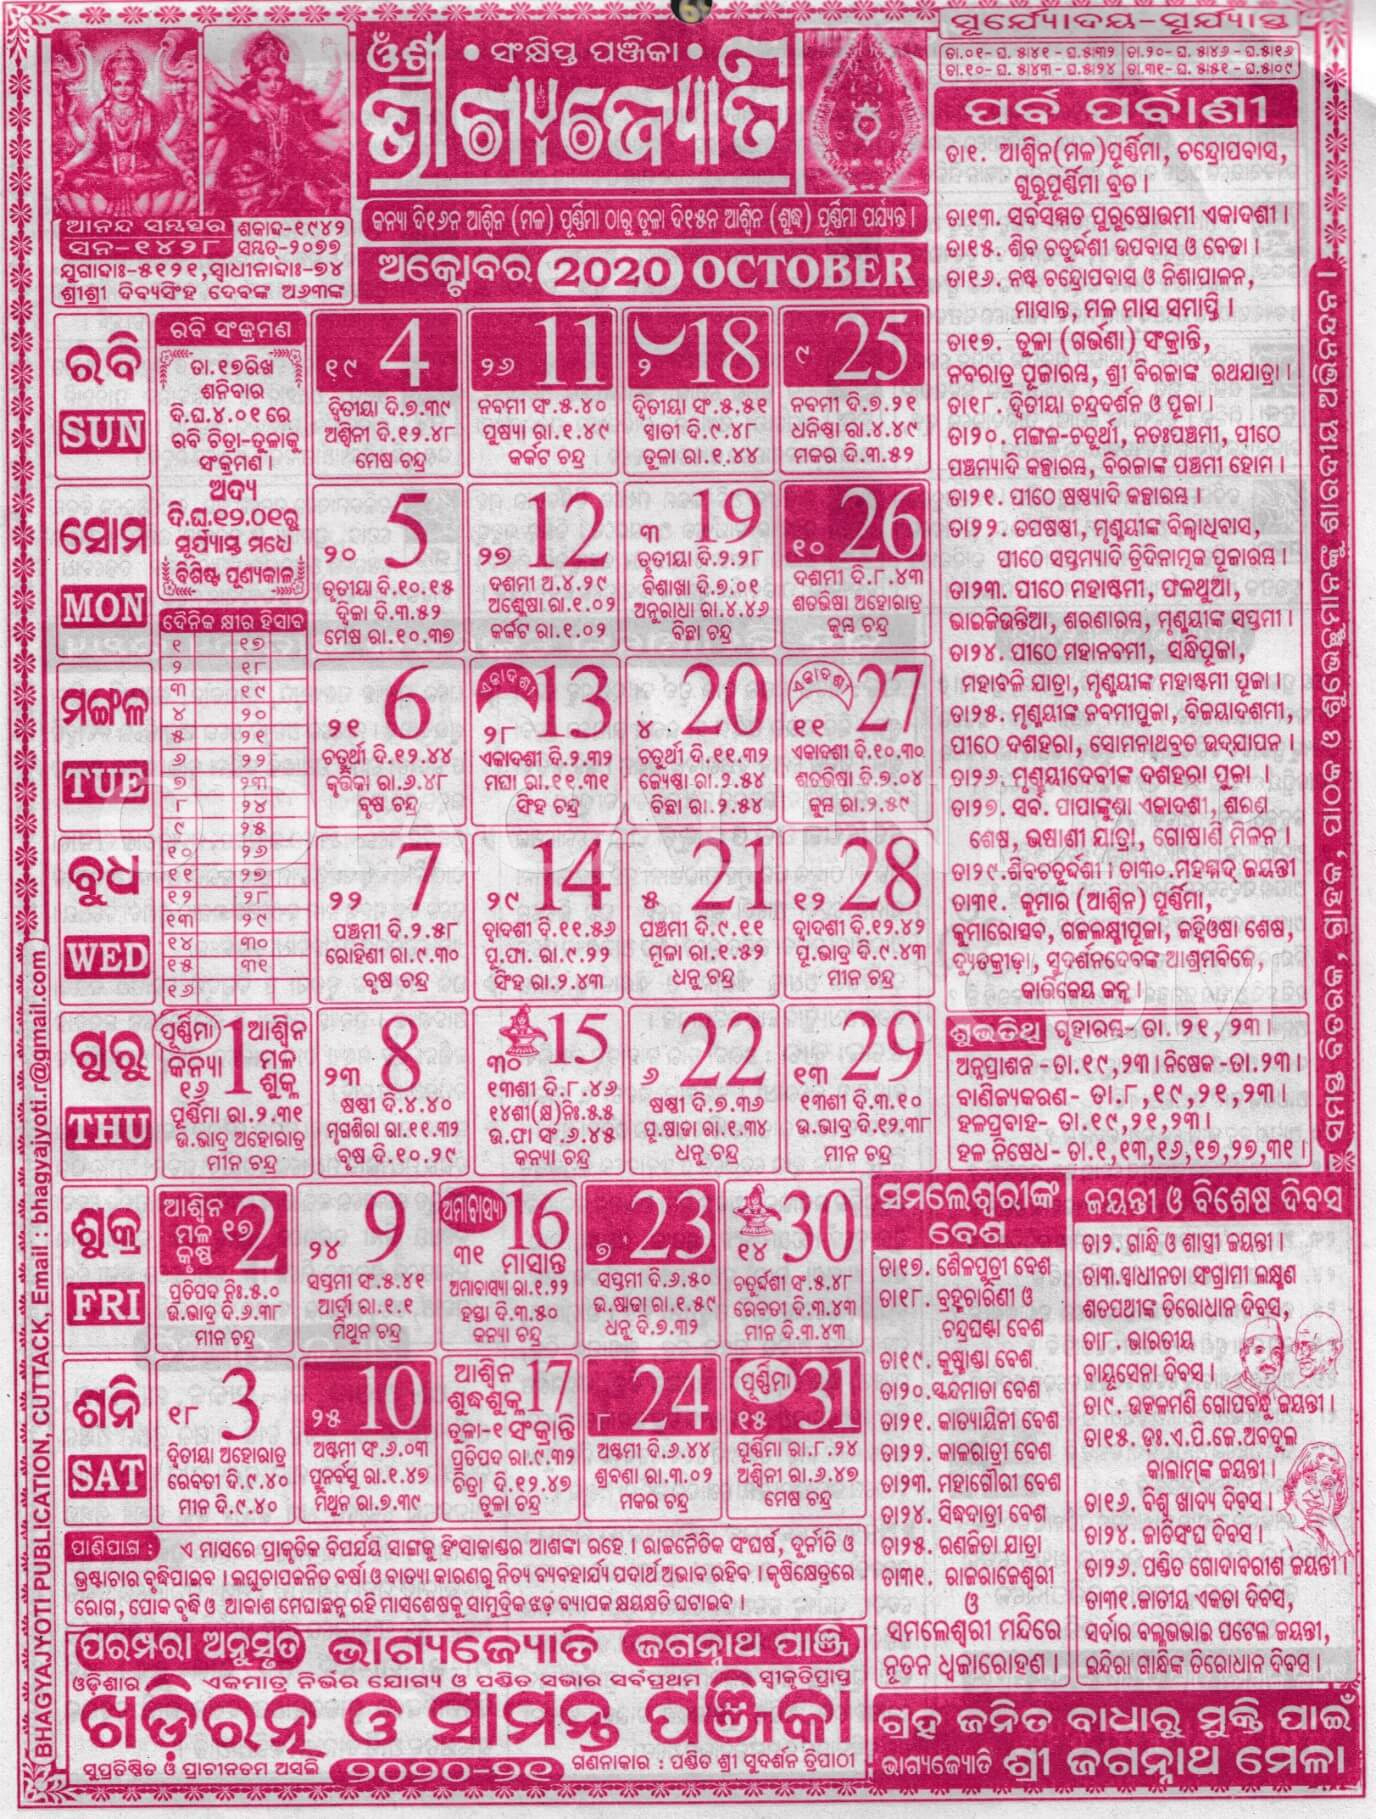 Bhagyajyoti Odia Calendar October 2020 - Download Hd Quality Odia Calendar 2021 November